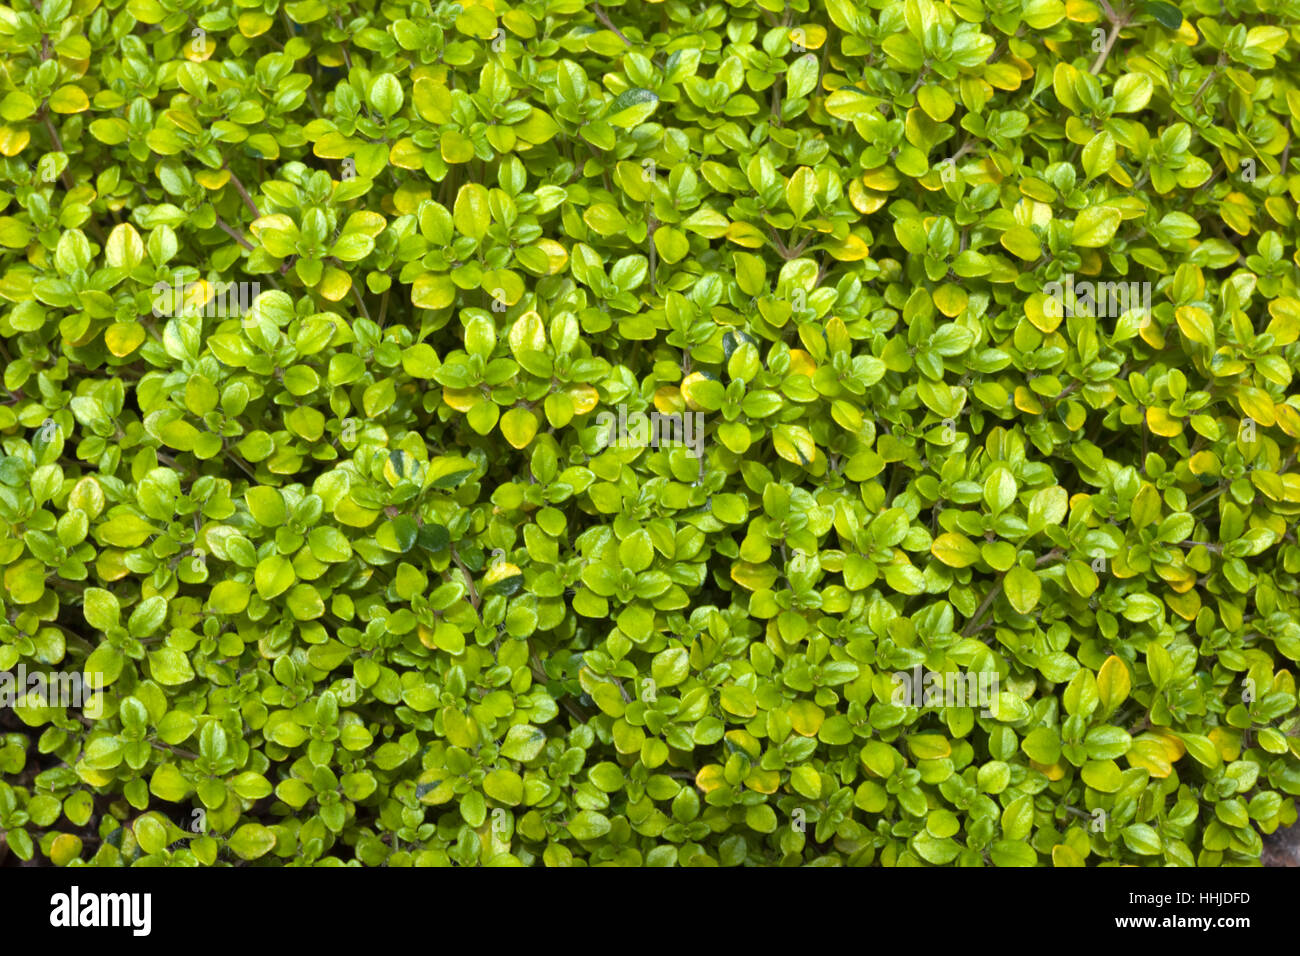 Thymus vulgaris aureus - Golden thyme Stock Photo